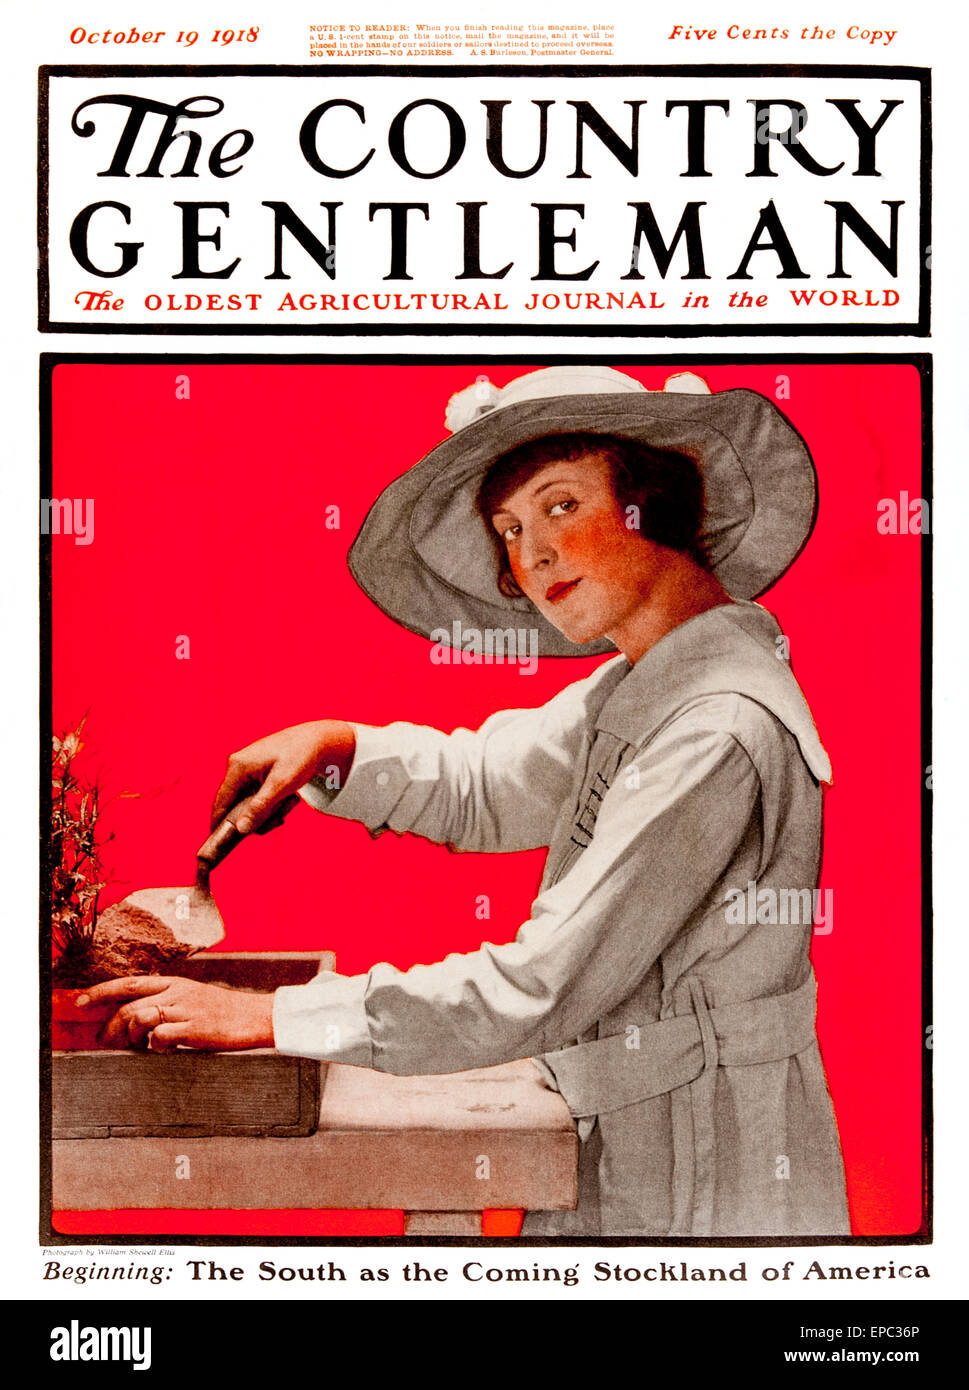 Country gentlemen. The Country Gentleman обложки журналов. The Country Gentleman Magazine Cover. Английский сельскохозяйственный журнал. The Country Gentleman July 31 1915 обложки журналов.